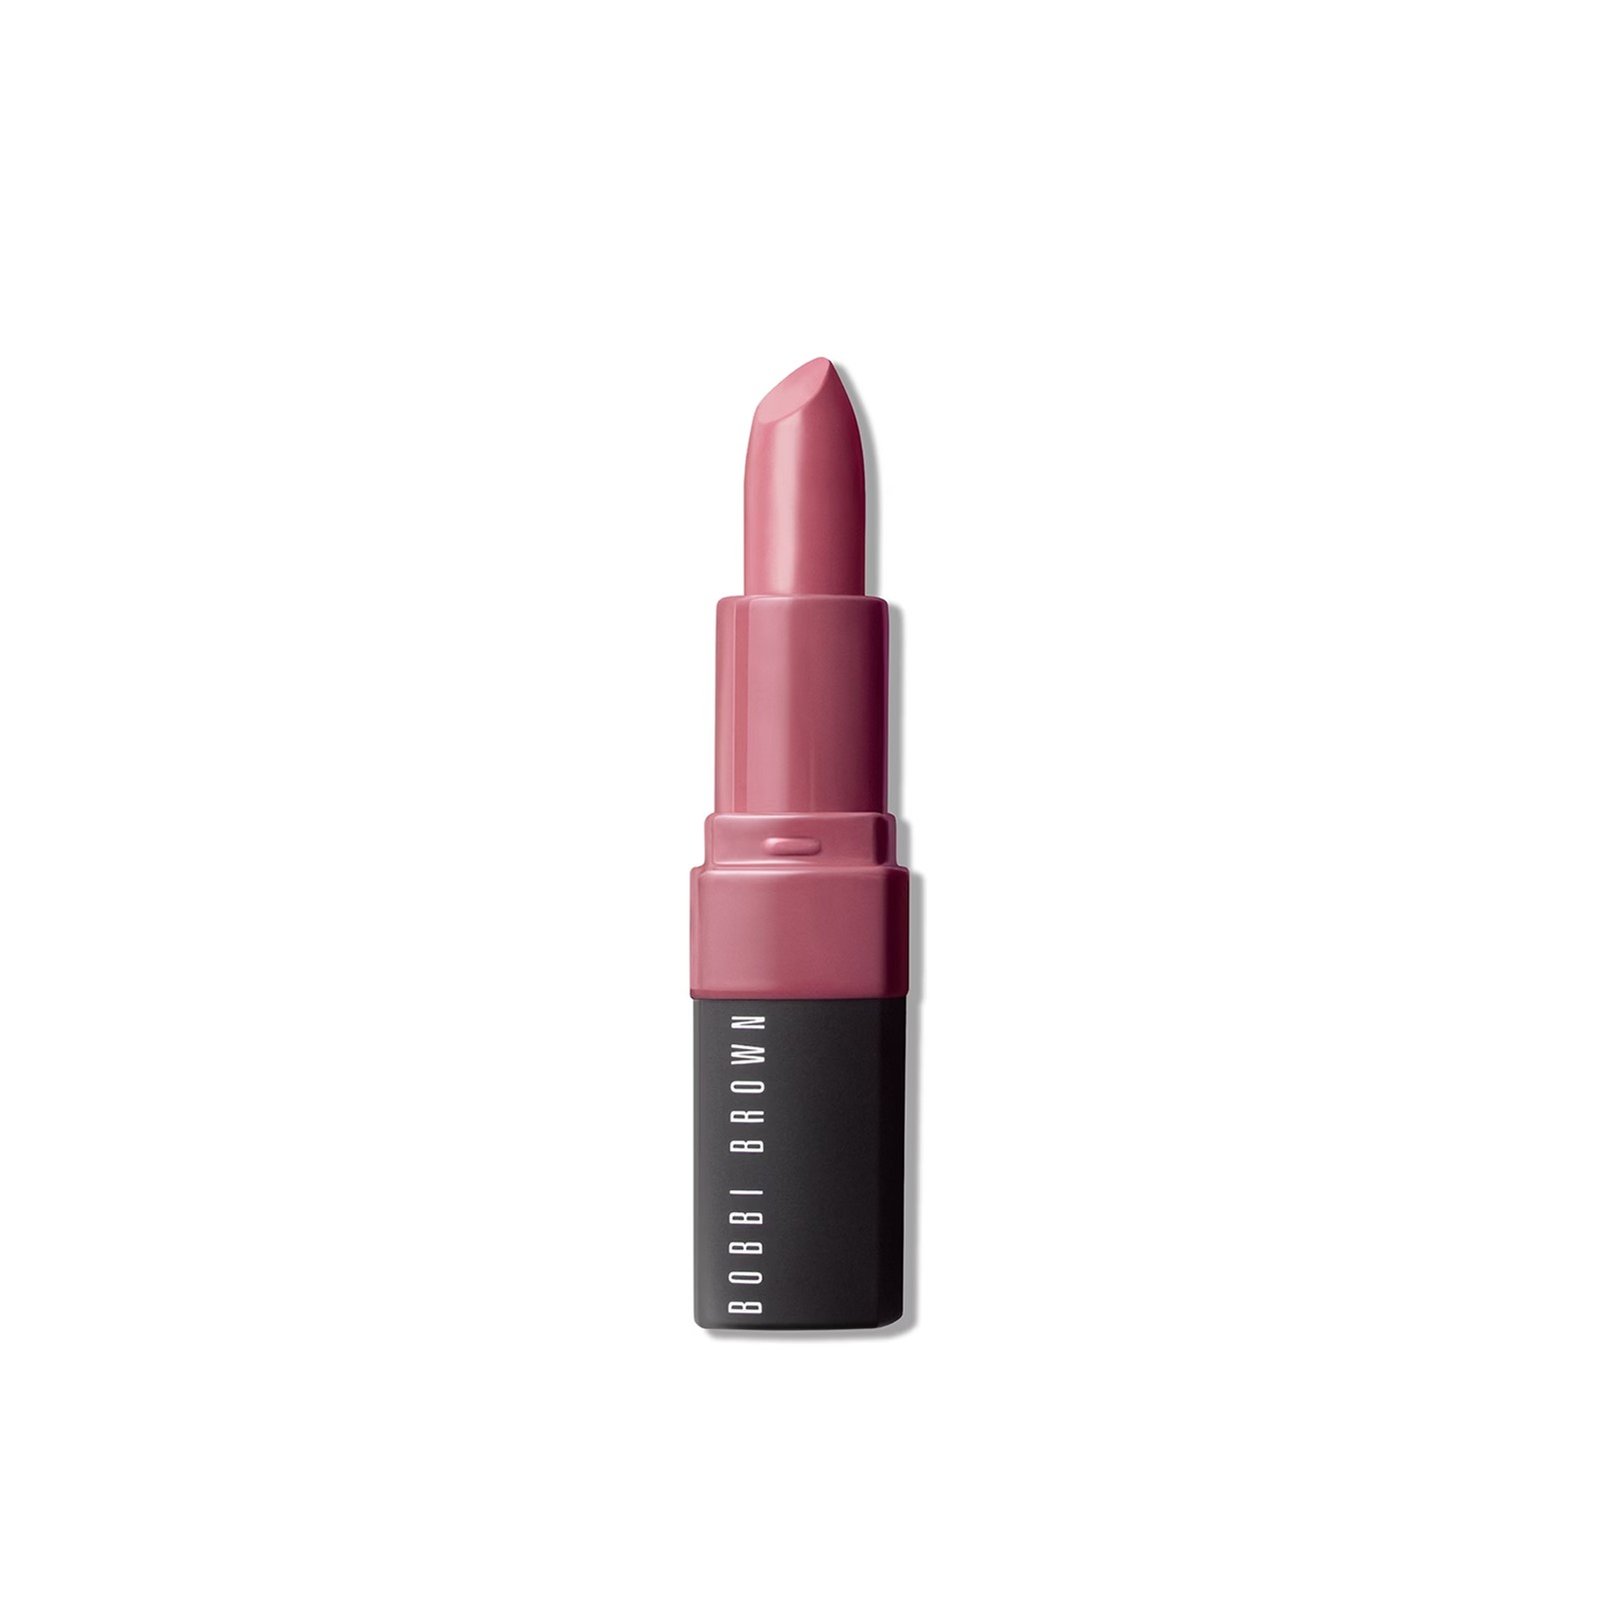 Bobbi Brown Crushed Lip Color Lilac 3.4g (0.11 oz)